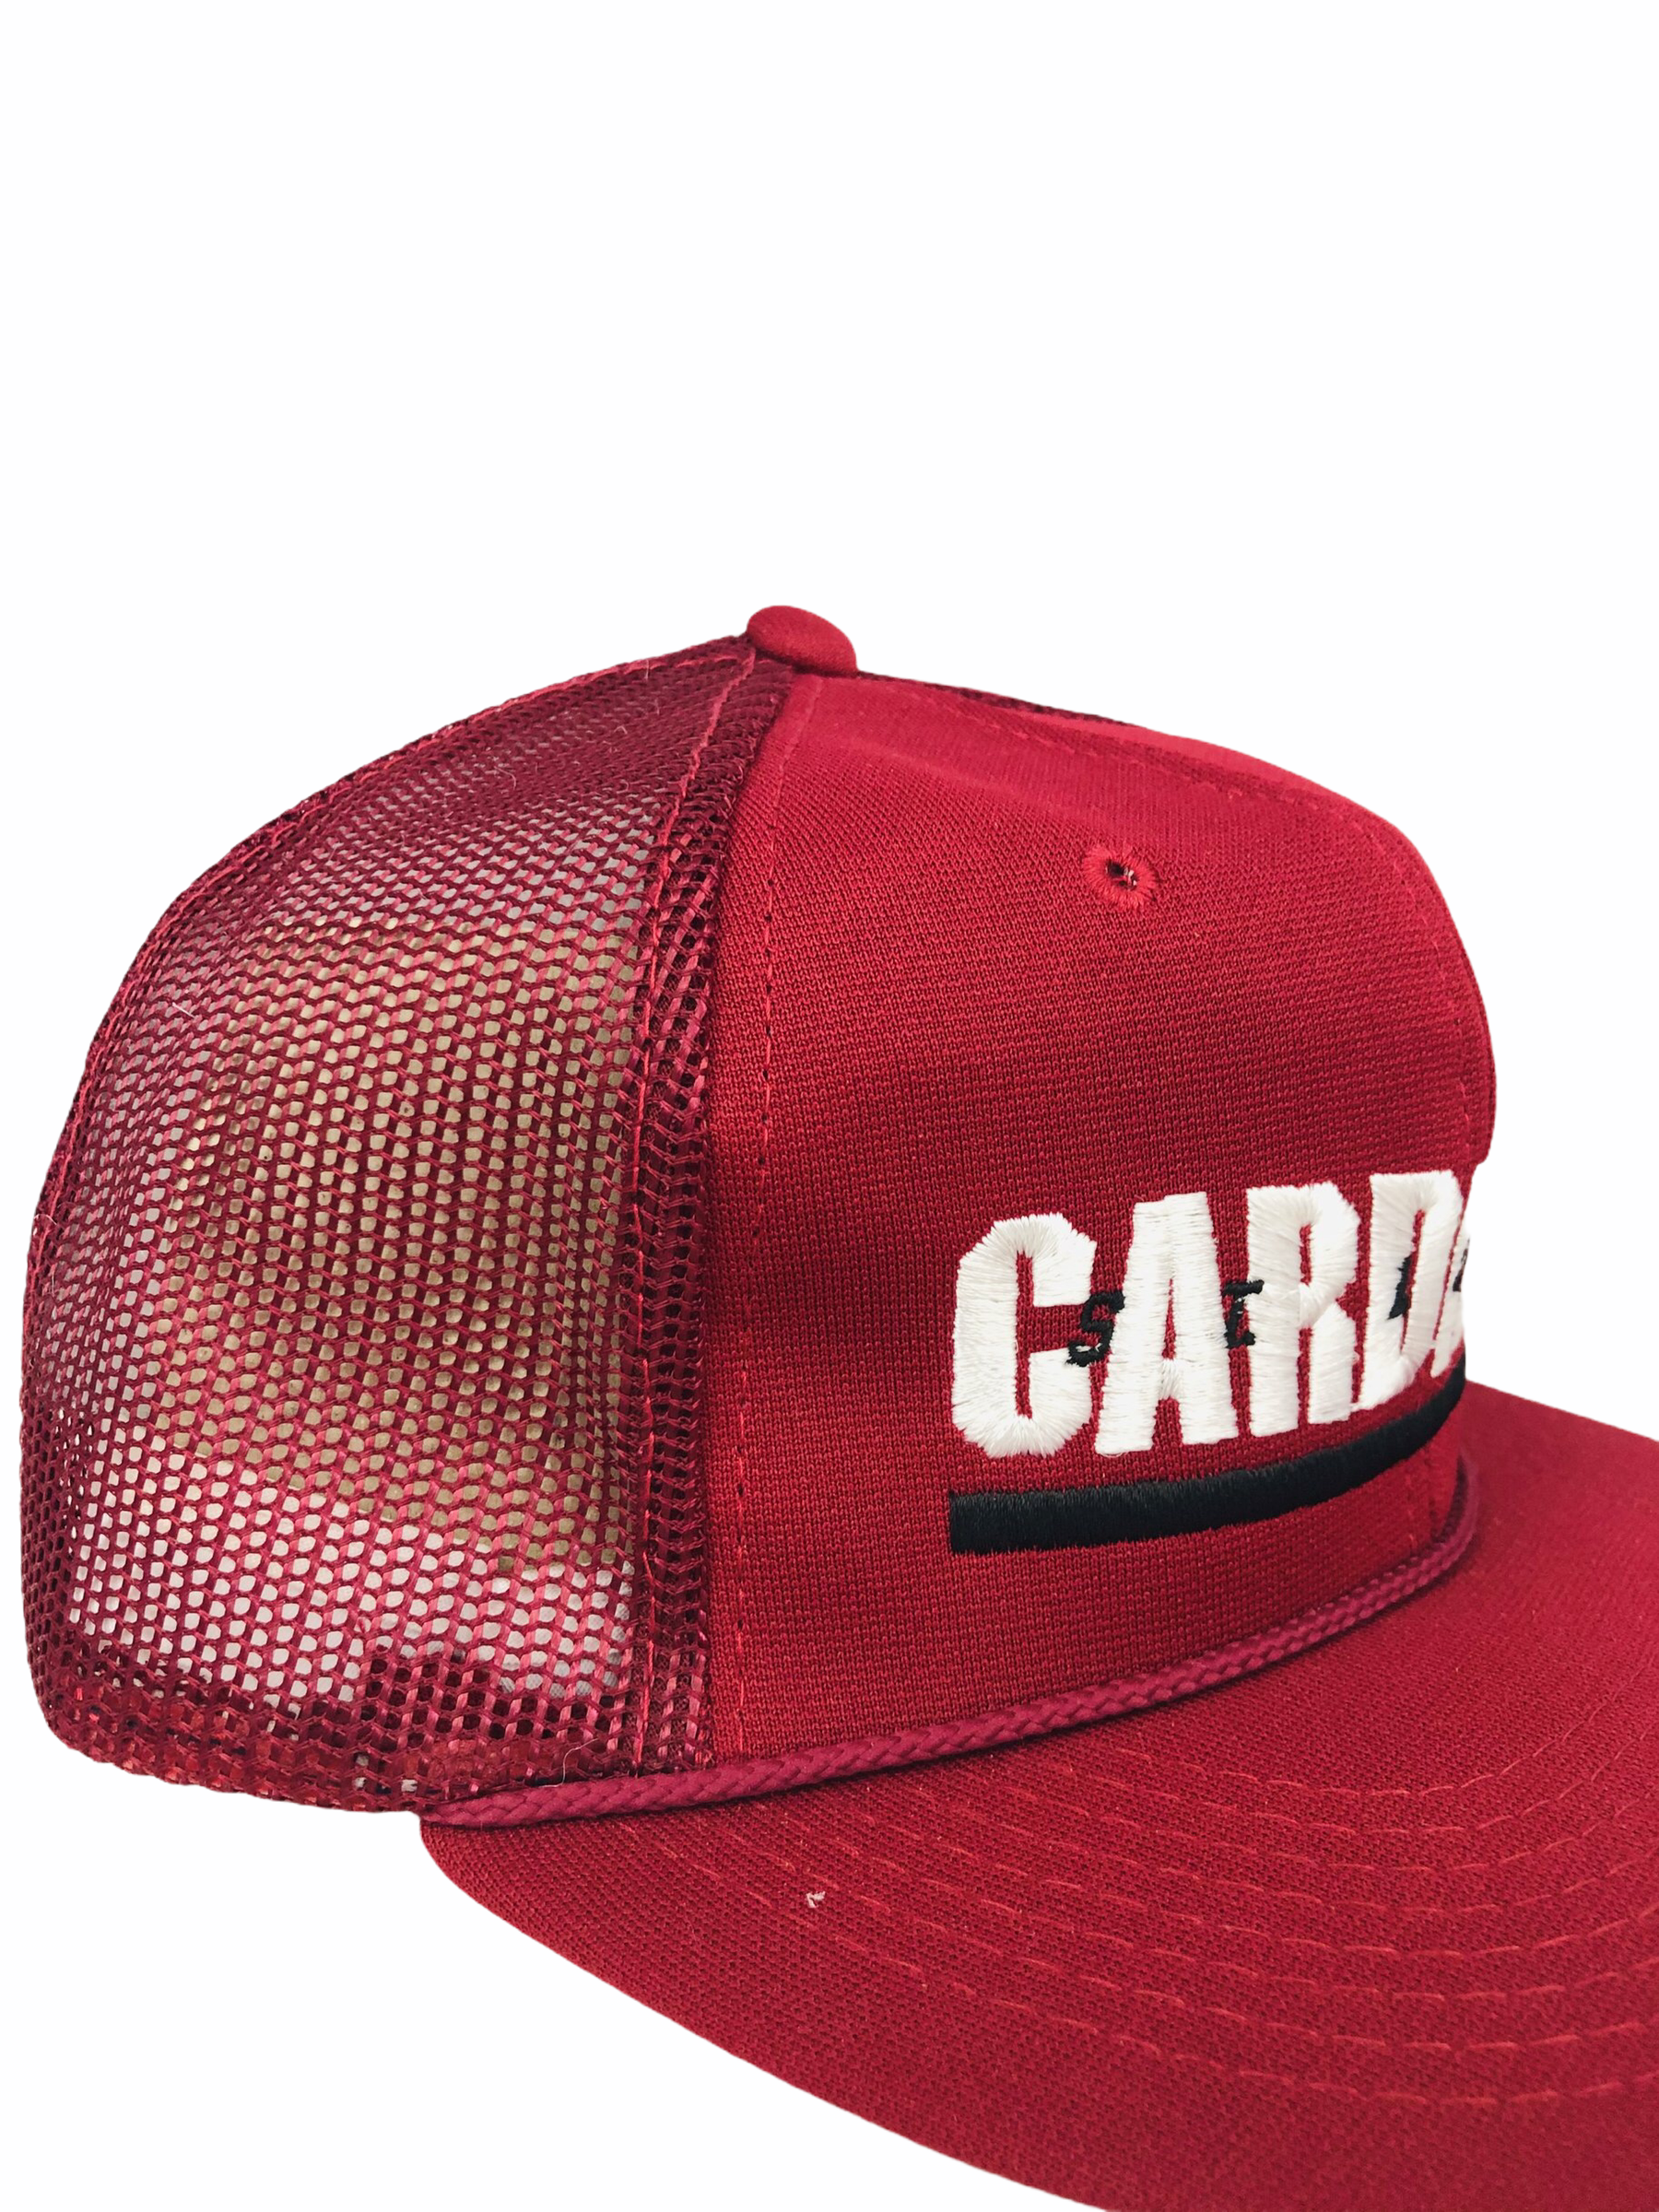 MLB, Accessories, Vintage St Louis Cardinals Hat Snapback Trucker Cap Red  Mesh 9s Mlb Team